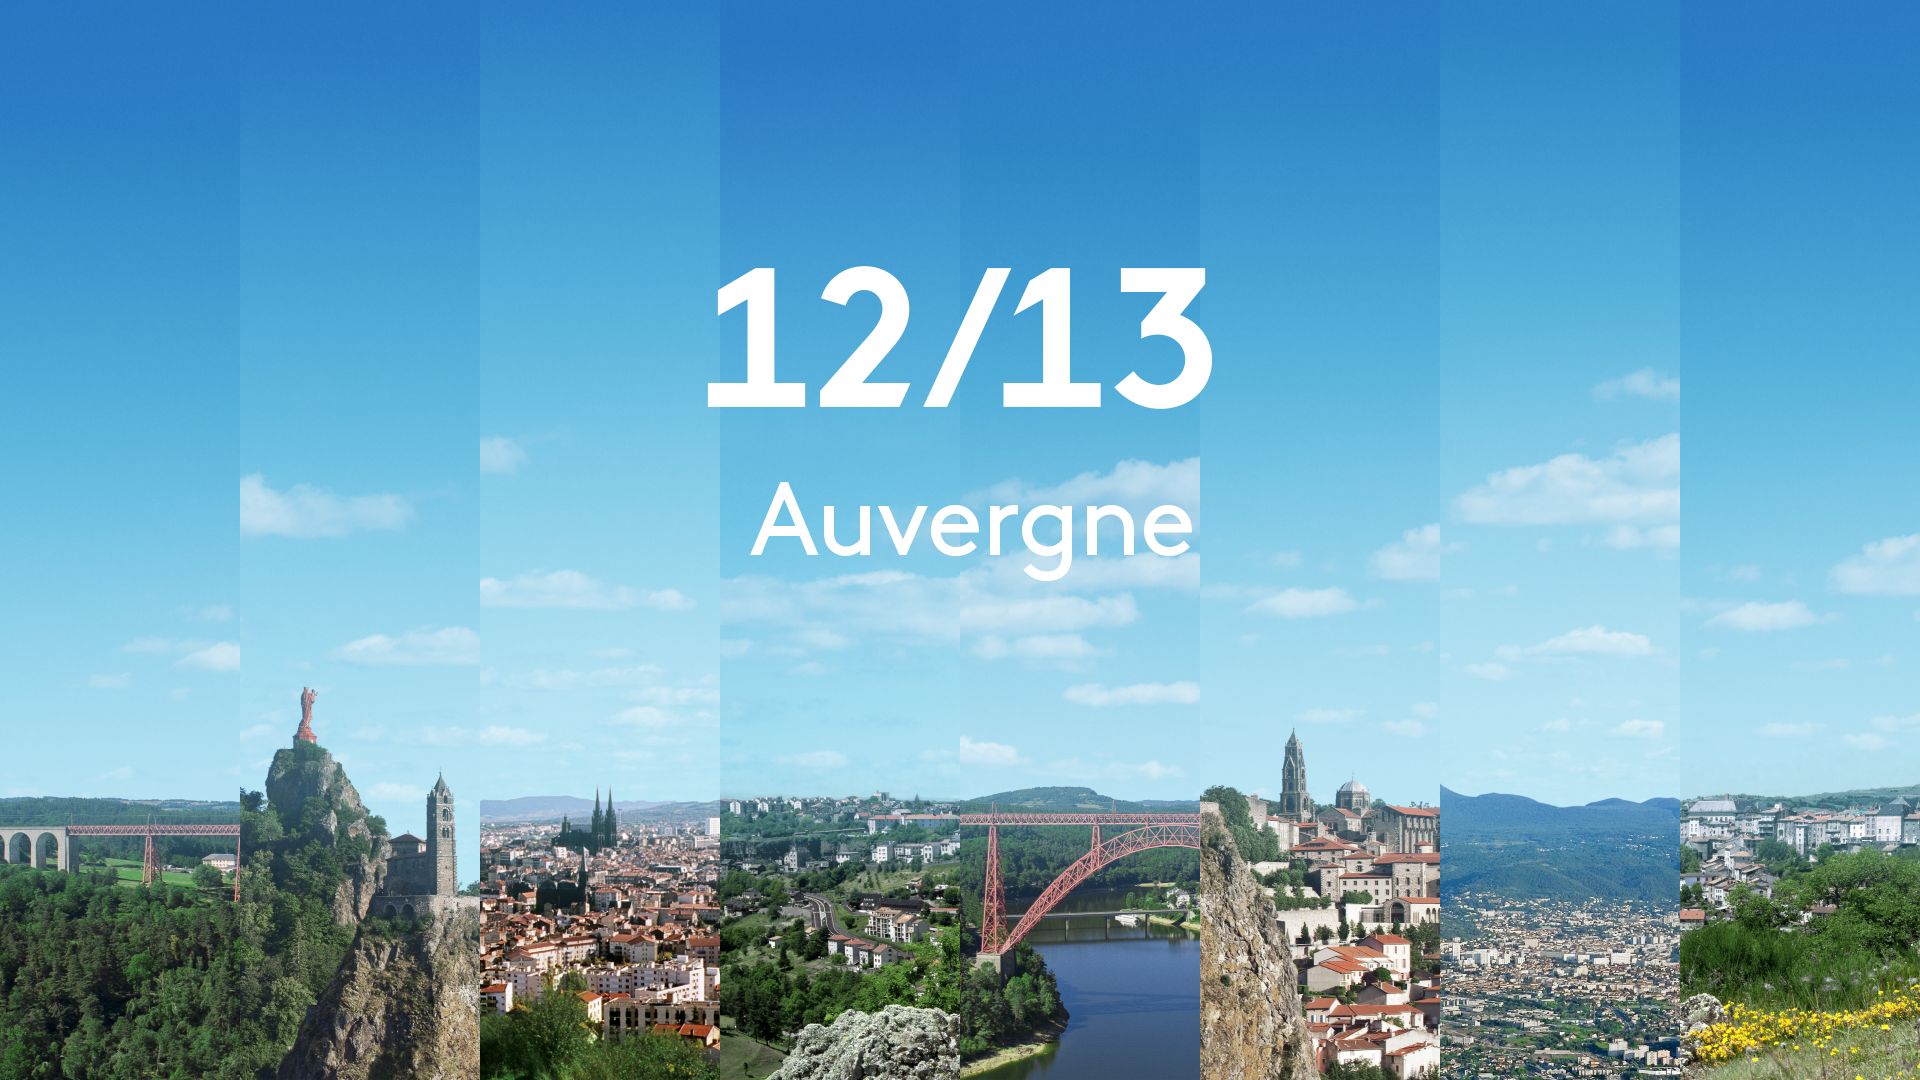 JT 12/13 - Auvergne